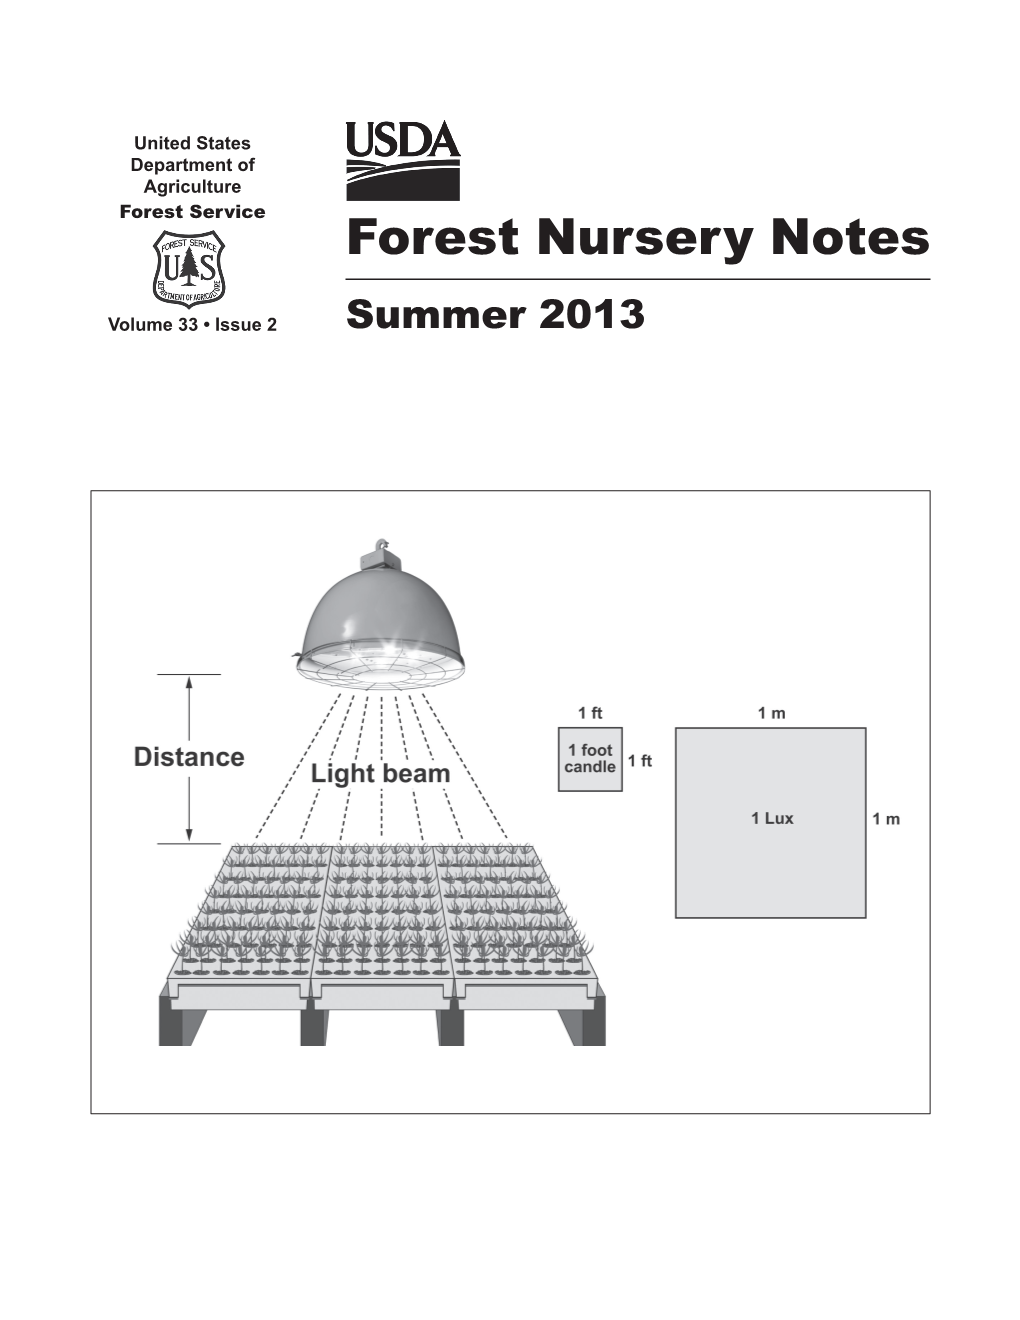 2013 Summer Forest Nursery Notes